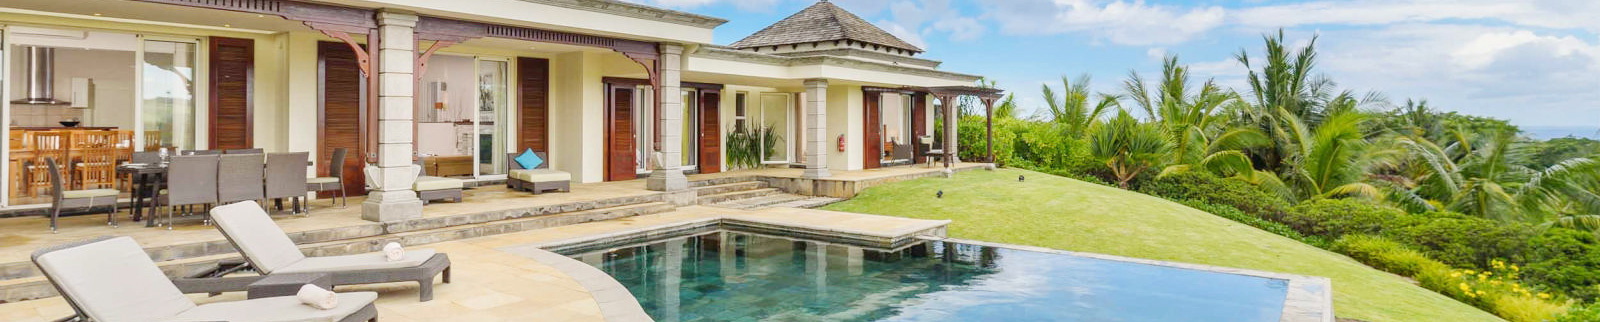 Rental Villas Mauritius / Tourist Villas in Mauritius / Holiday Villas for Hire